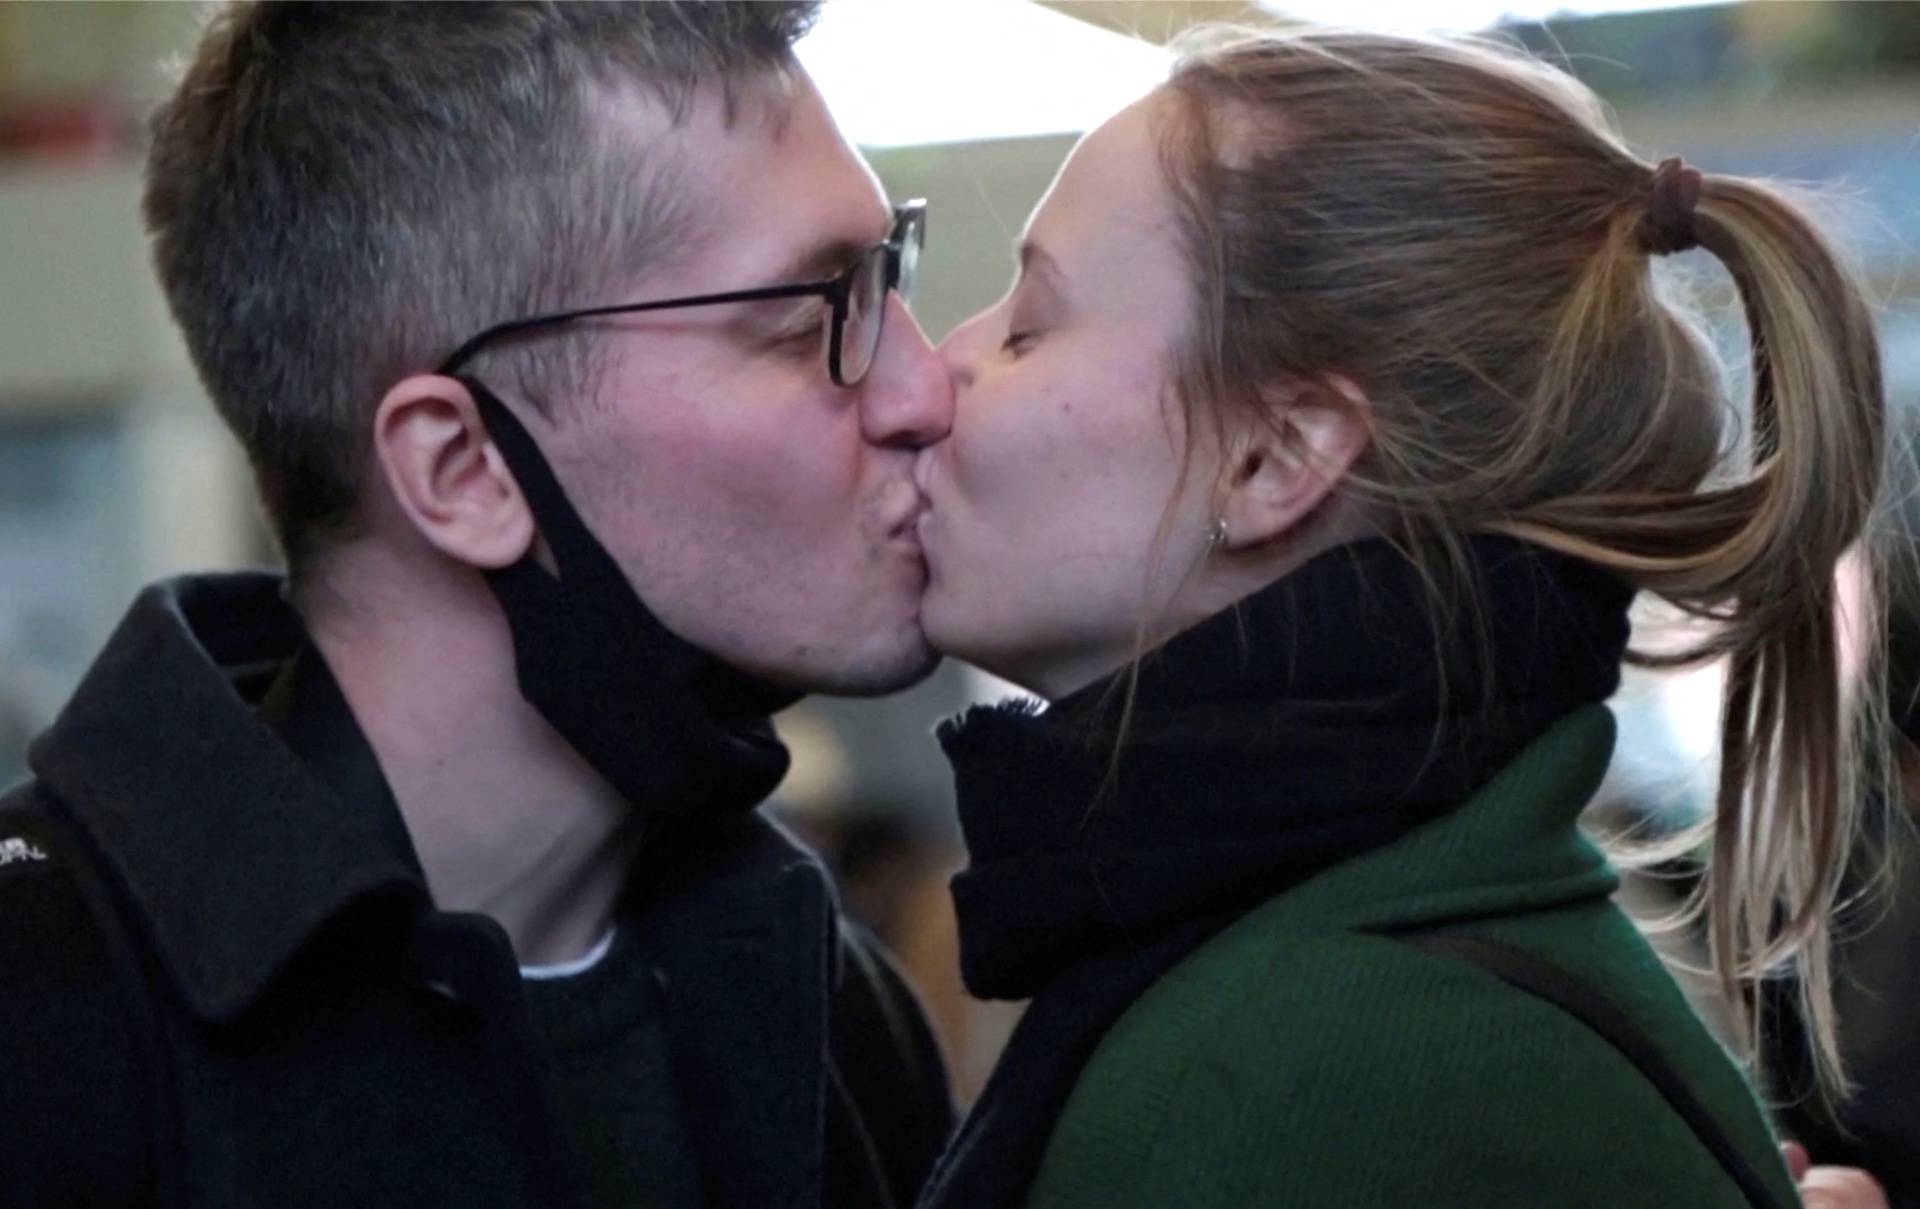 Russian software engineer Mikhail Liublin kisses his Ukrainian girlfriend at a train station in Zahony